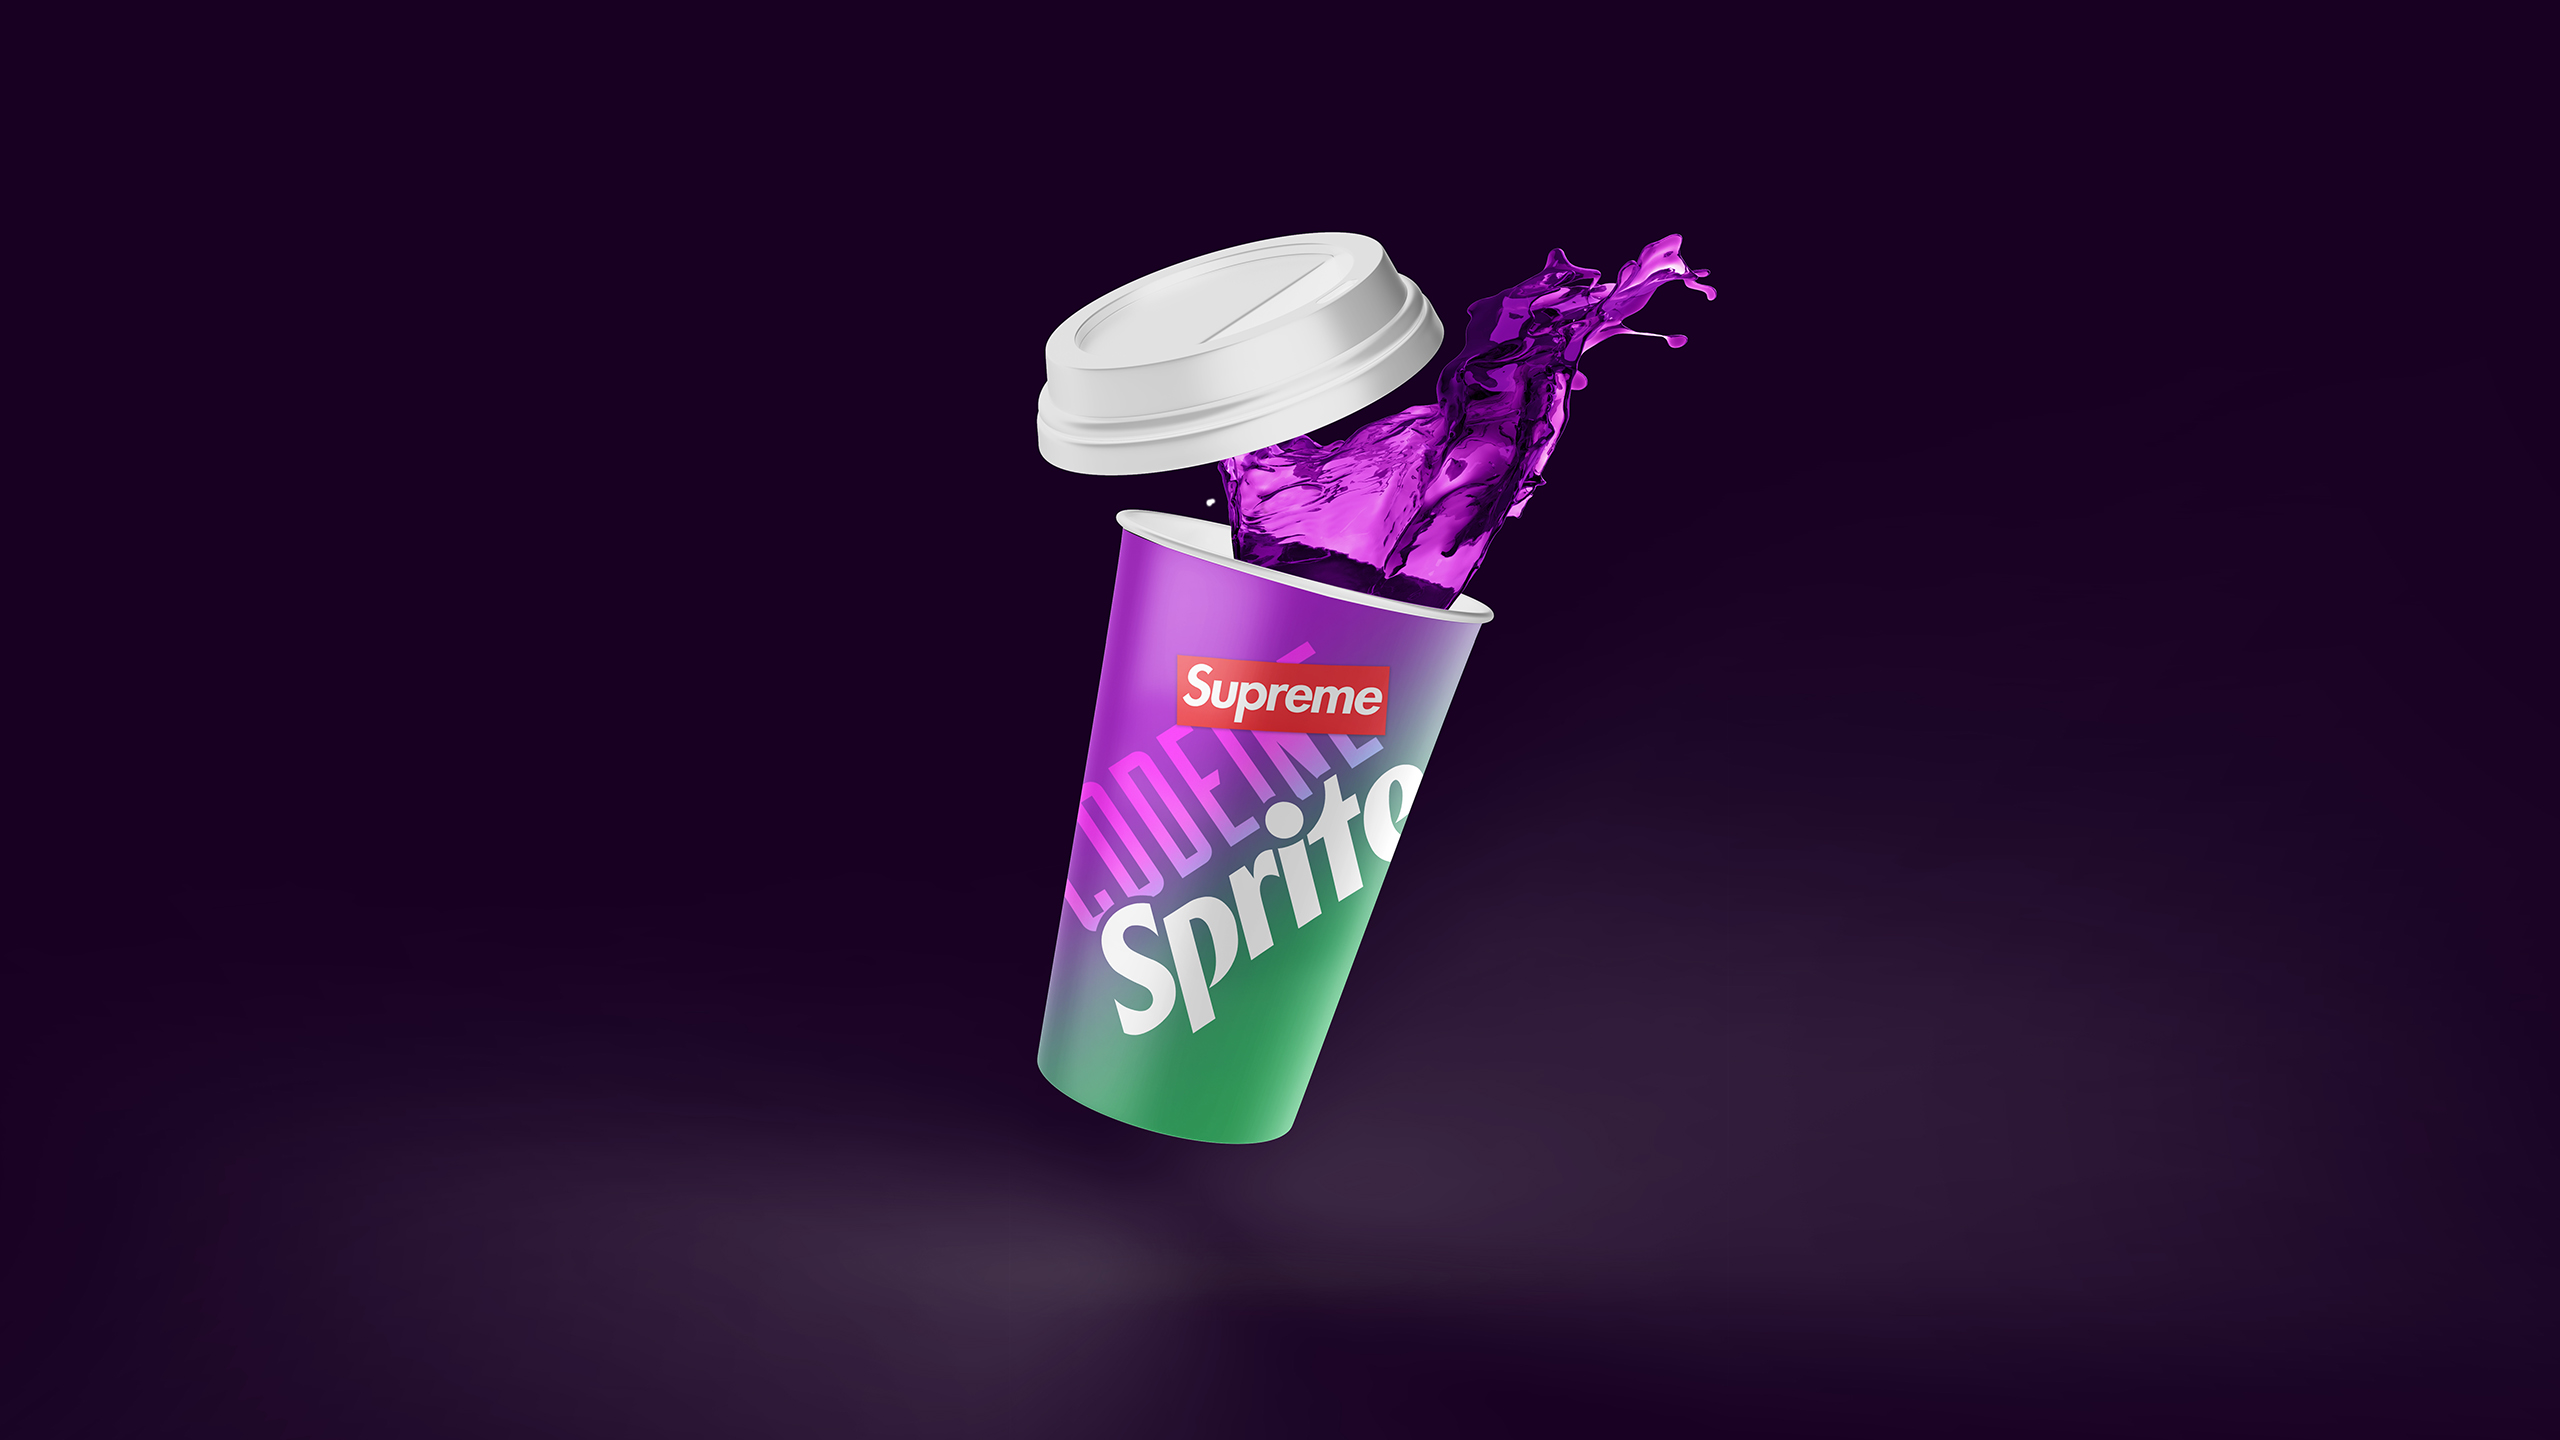 General 2560x1440 dirty Sprite (drink) purple background drink cup supreme soda codeine simple background digital art